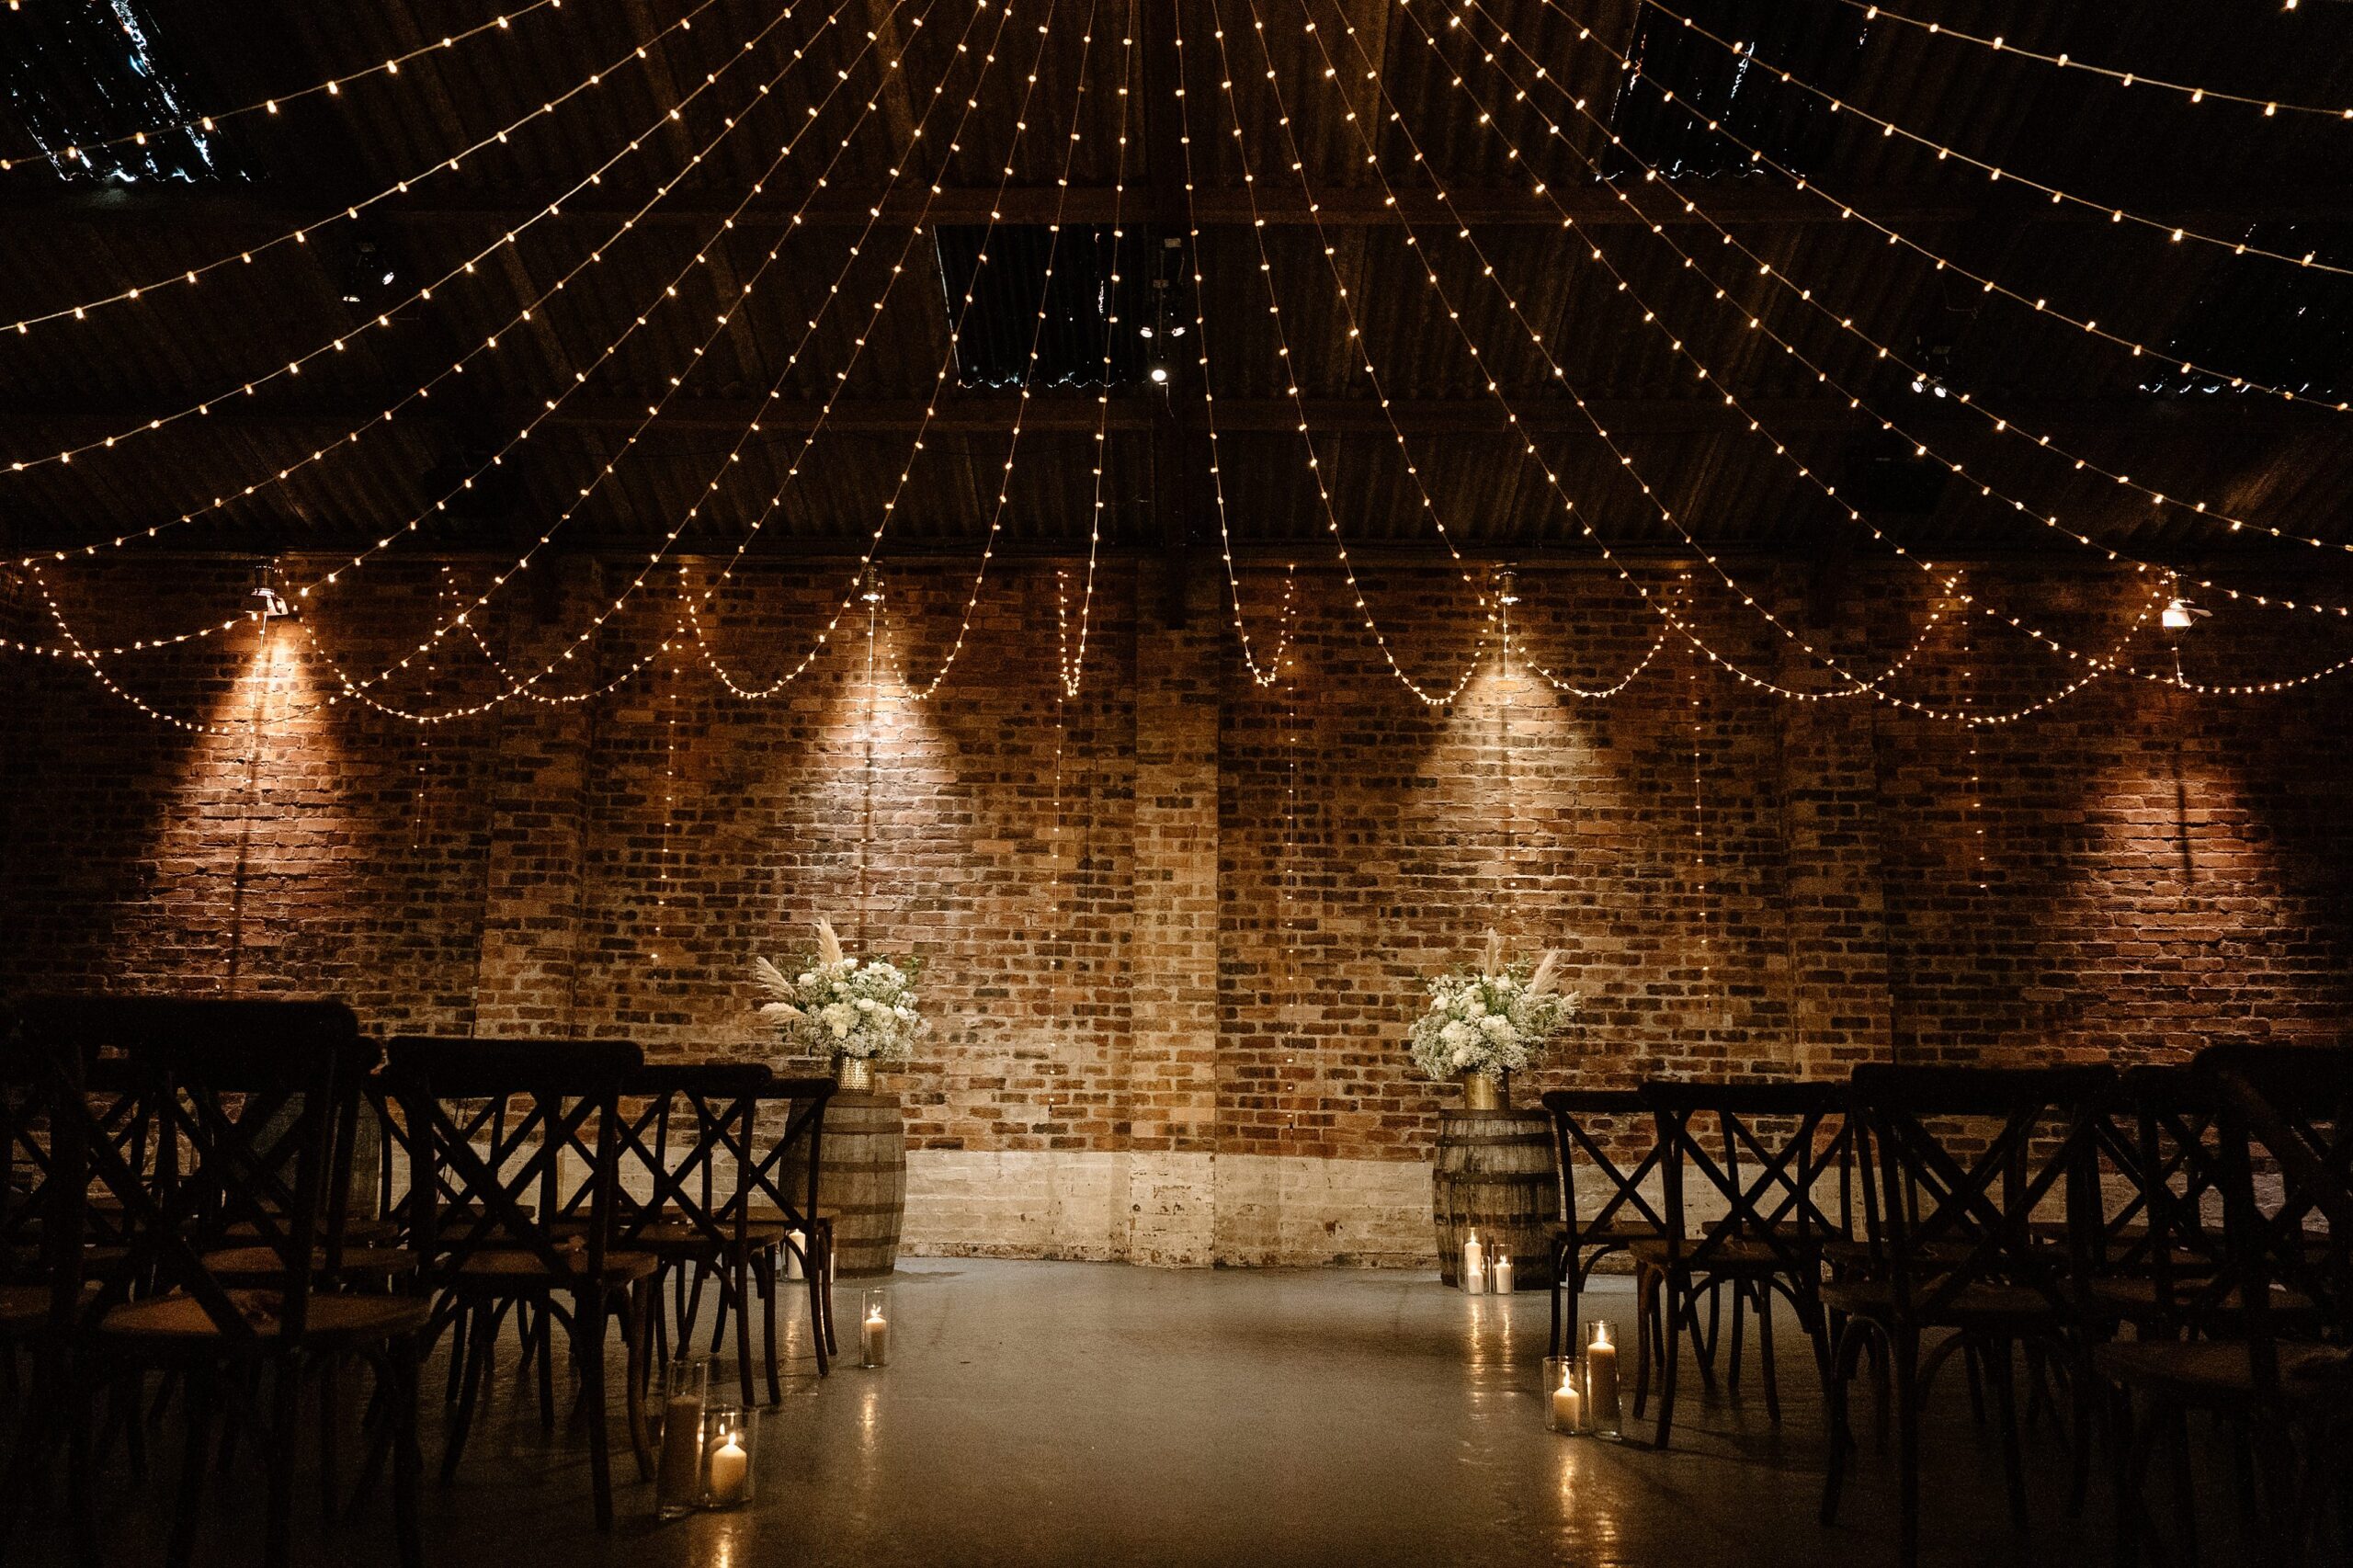 kinkell byre wedding photos interior inside view of farm barn wedding venue st andrews scotland ceremony setup with fairy lights